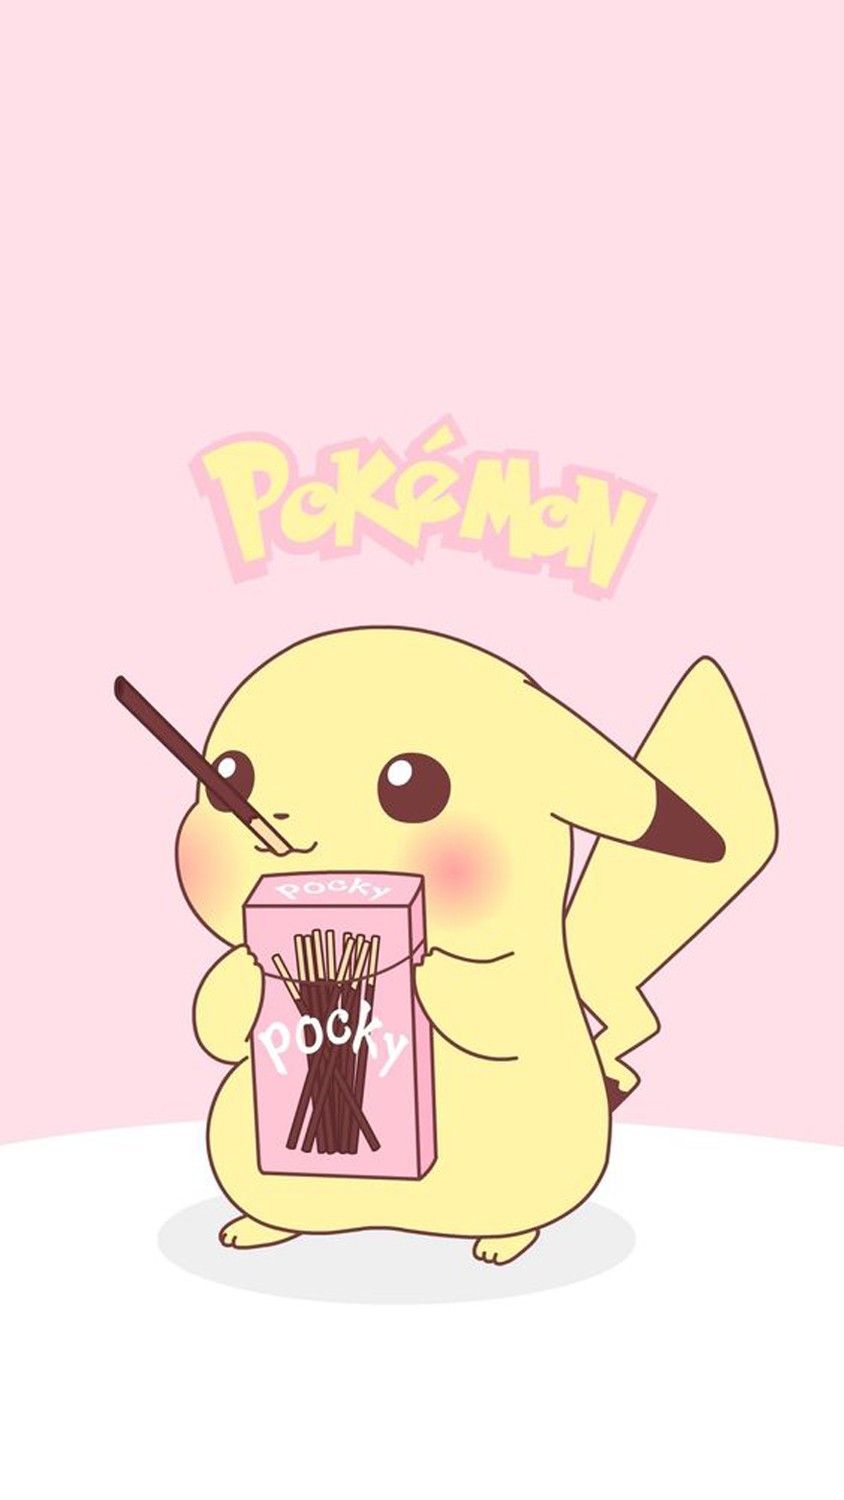 Pokemon. Cute pokemon wallpaper, Pikachu wallpaper, Cute cartoon wallpaper